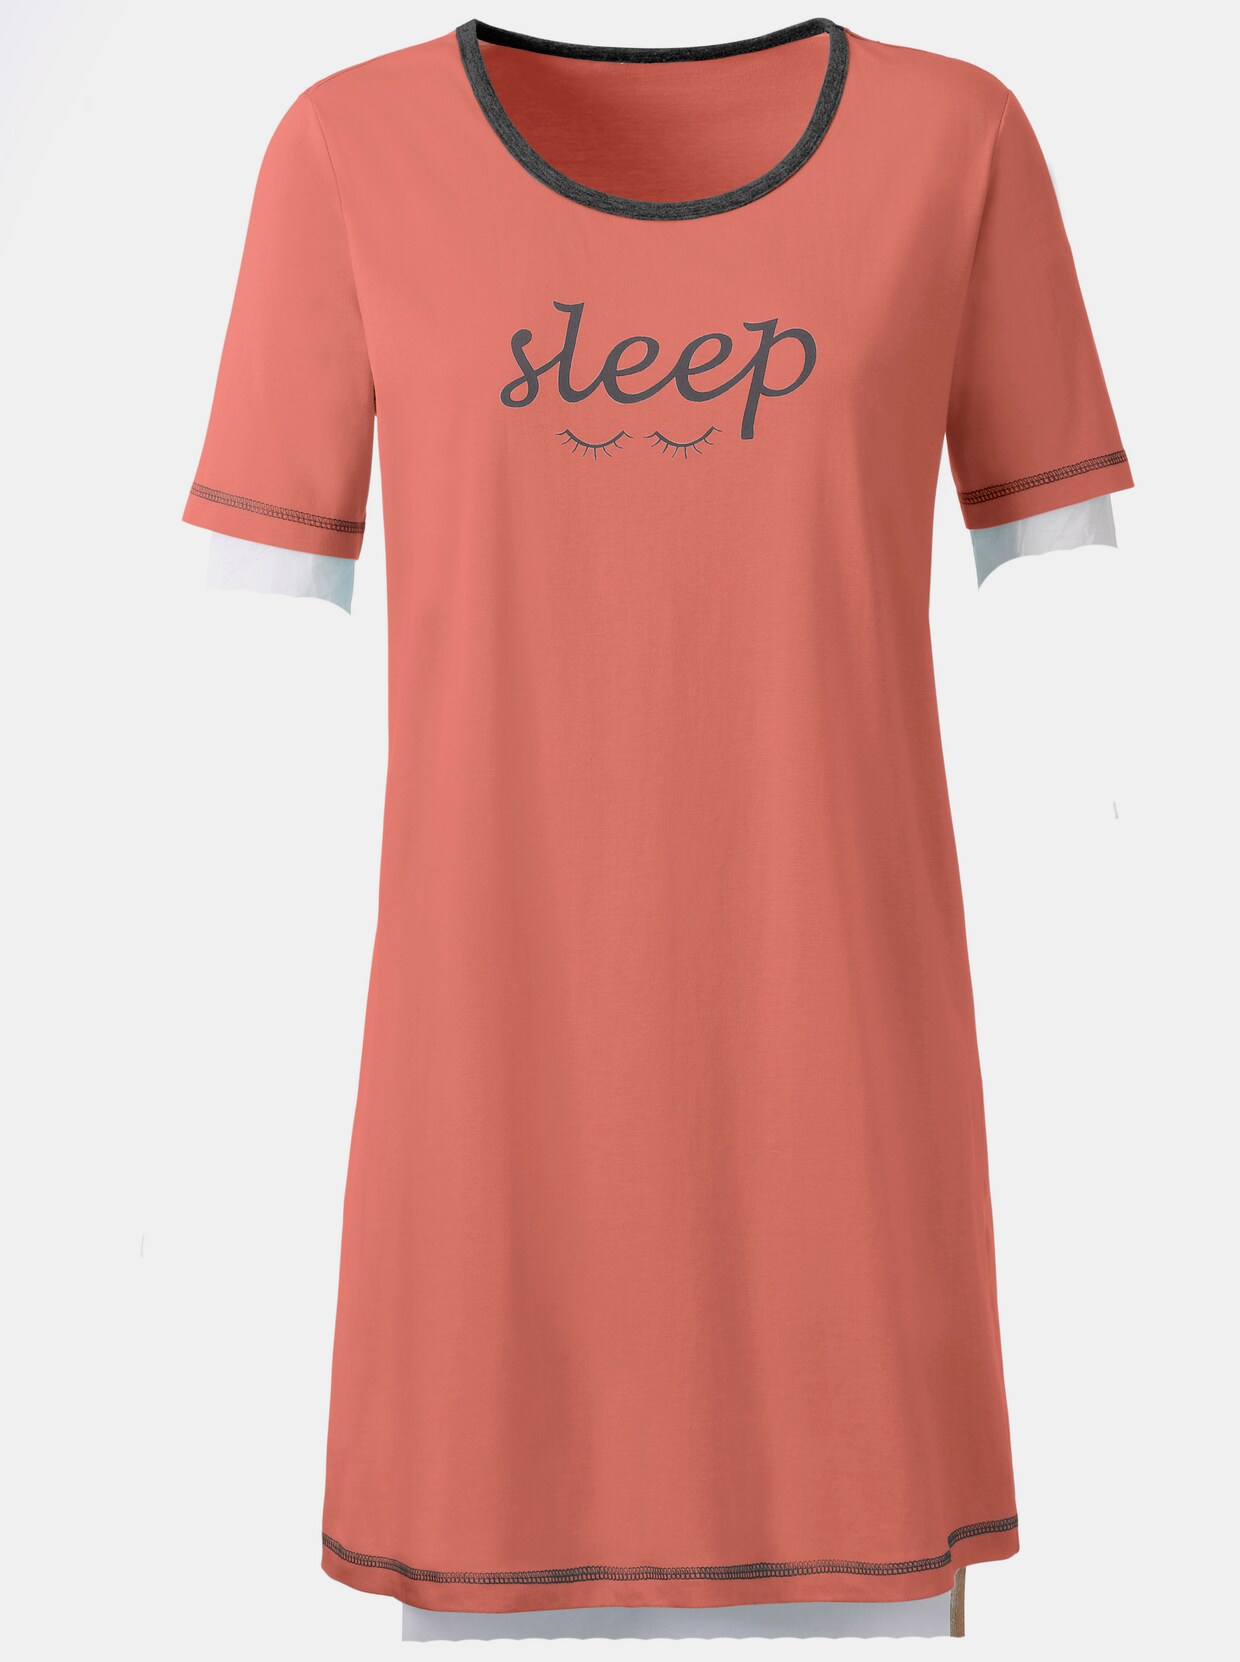 wäschepur Sleepshirts - dunkelgrau-meliert + melba